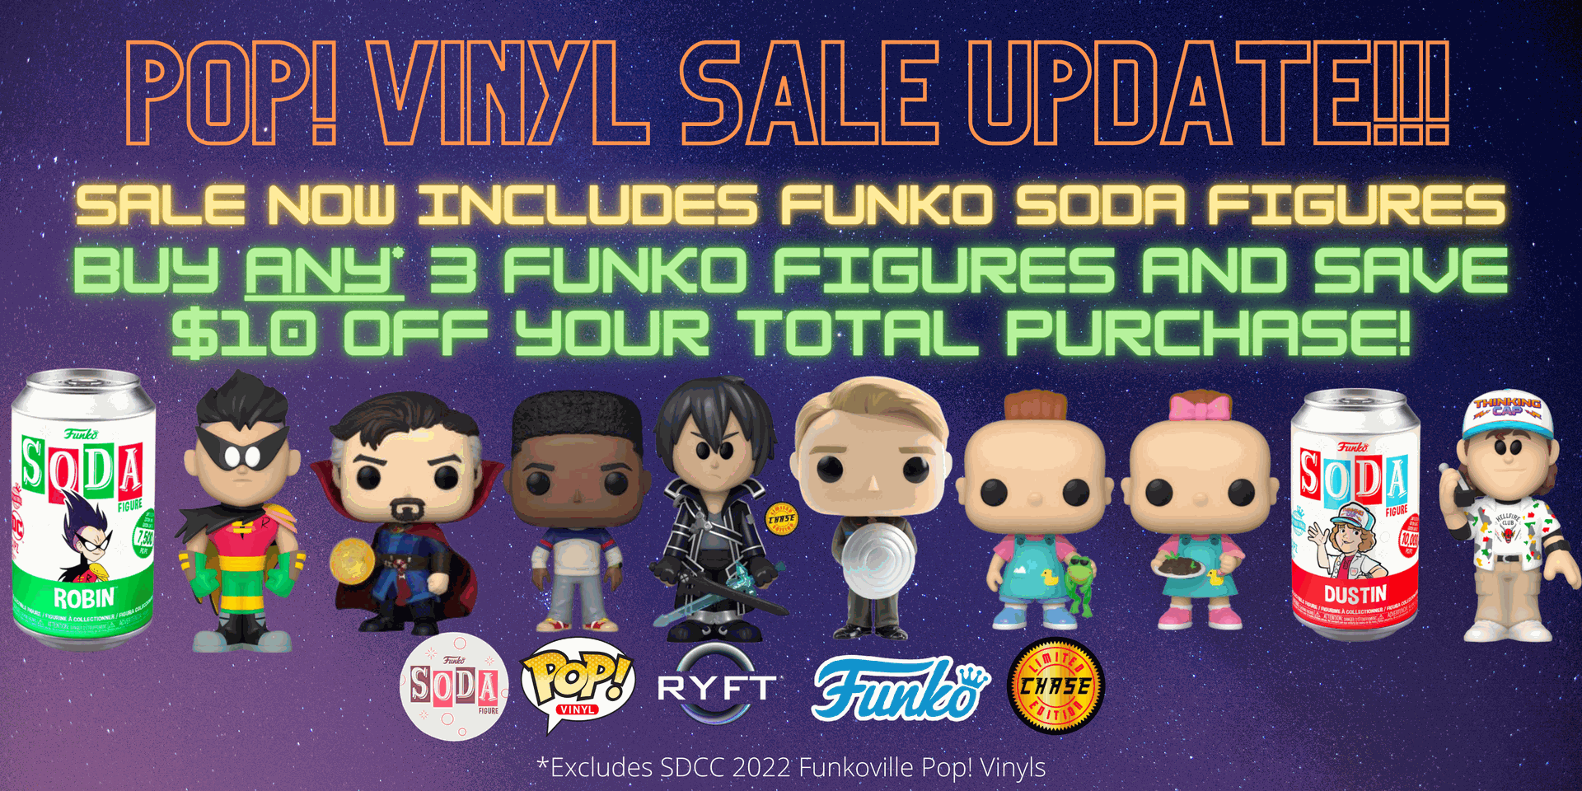 Buy 3 Save $10 Funko Figures Deal